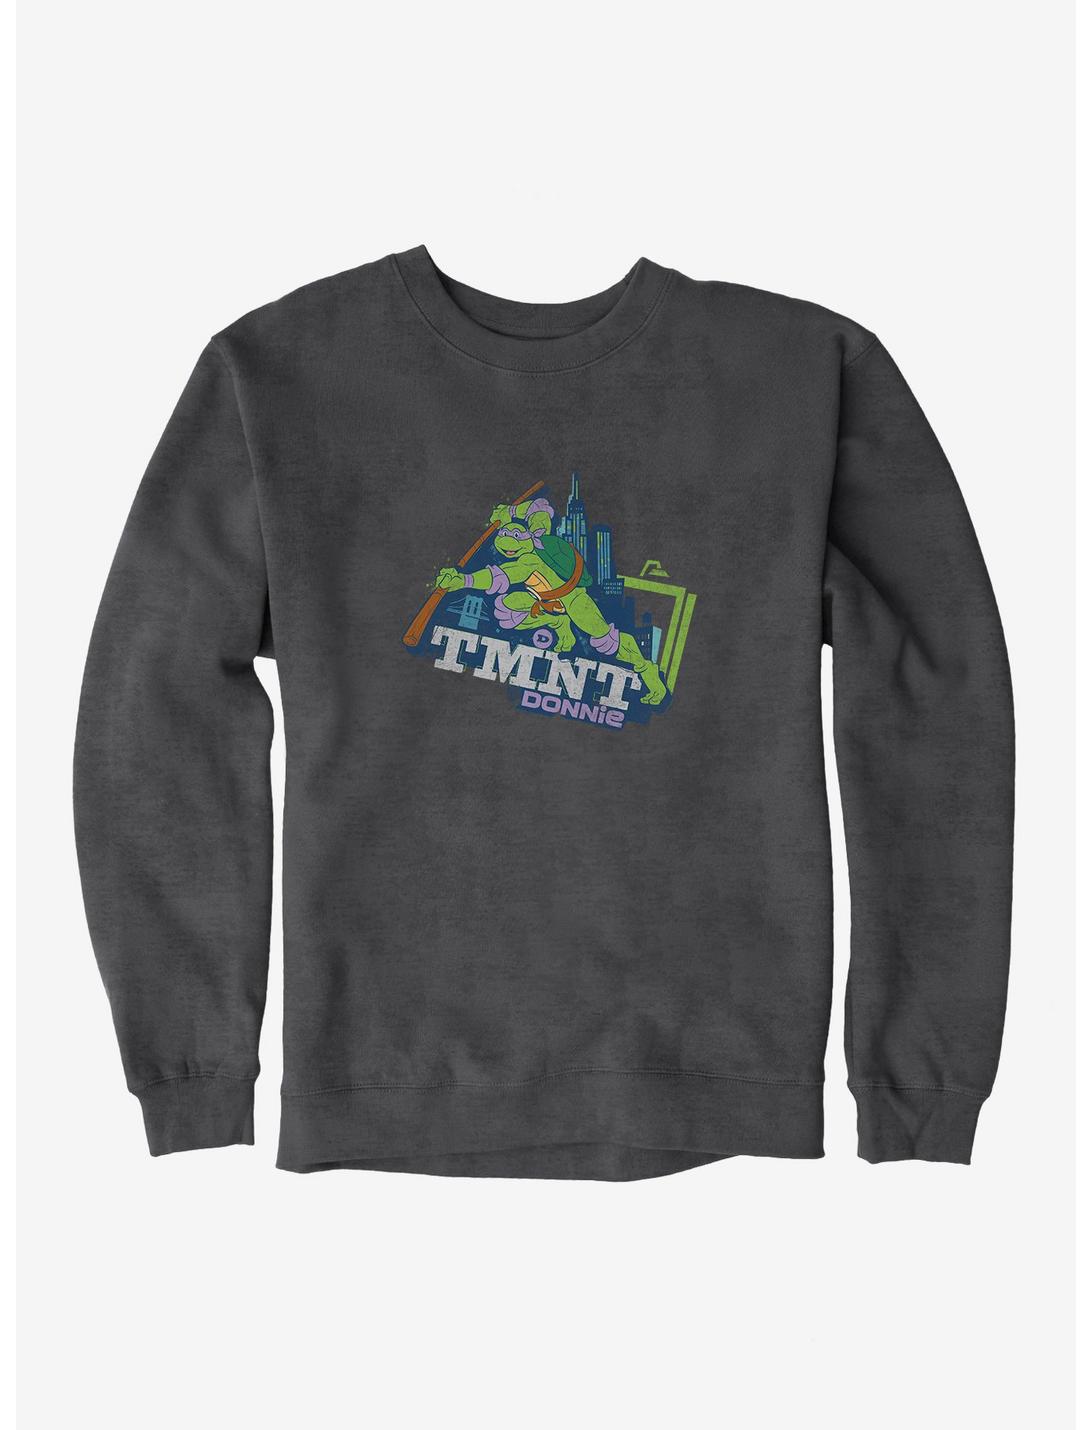 Teenage Mutant Ninja Turtles Powerful Ninja Sweatshirt, CHARCOAL HEATHER, hi-res